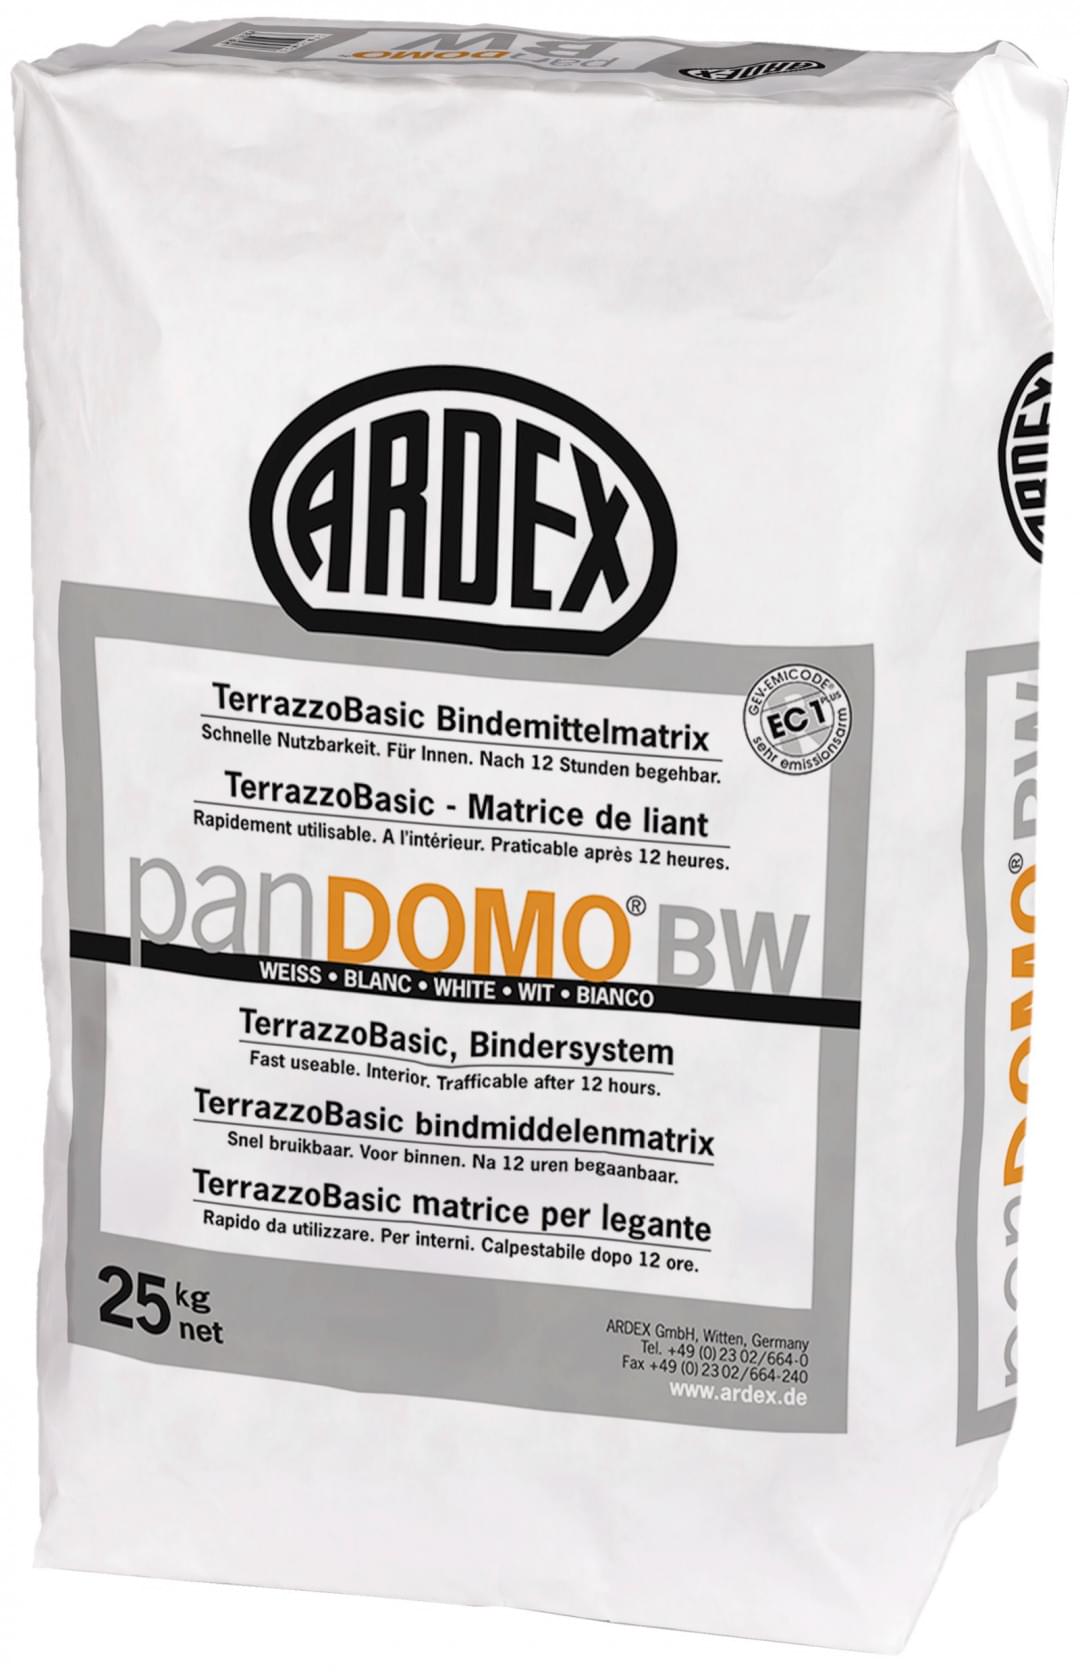 PANDOMO® BW from ARDEX